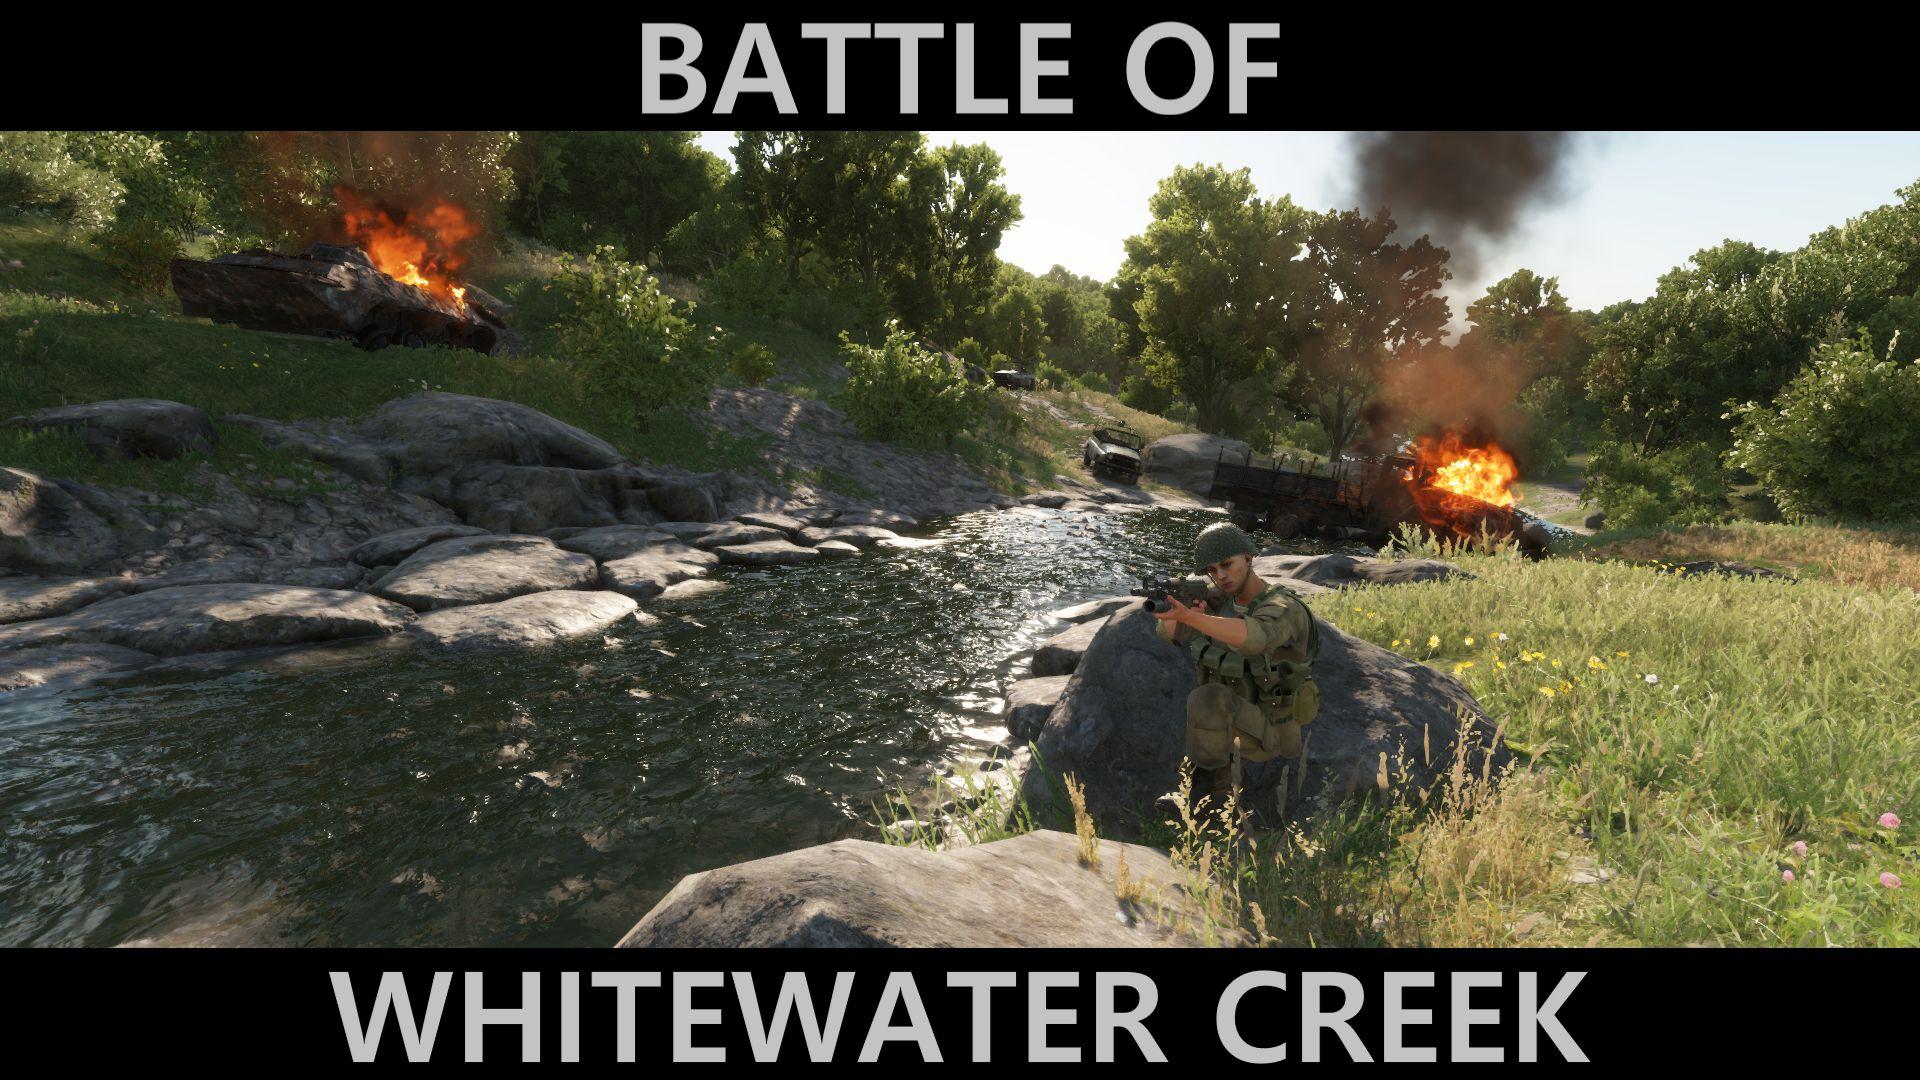 Battle of Whitewater Creek